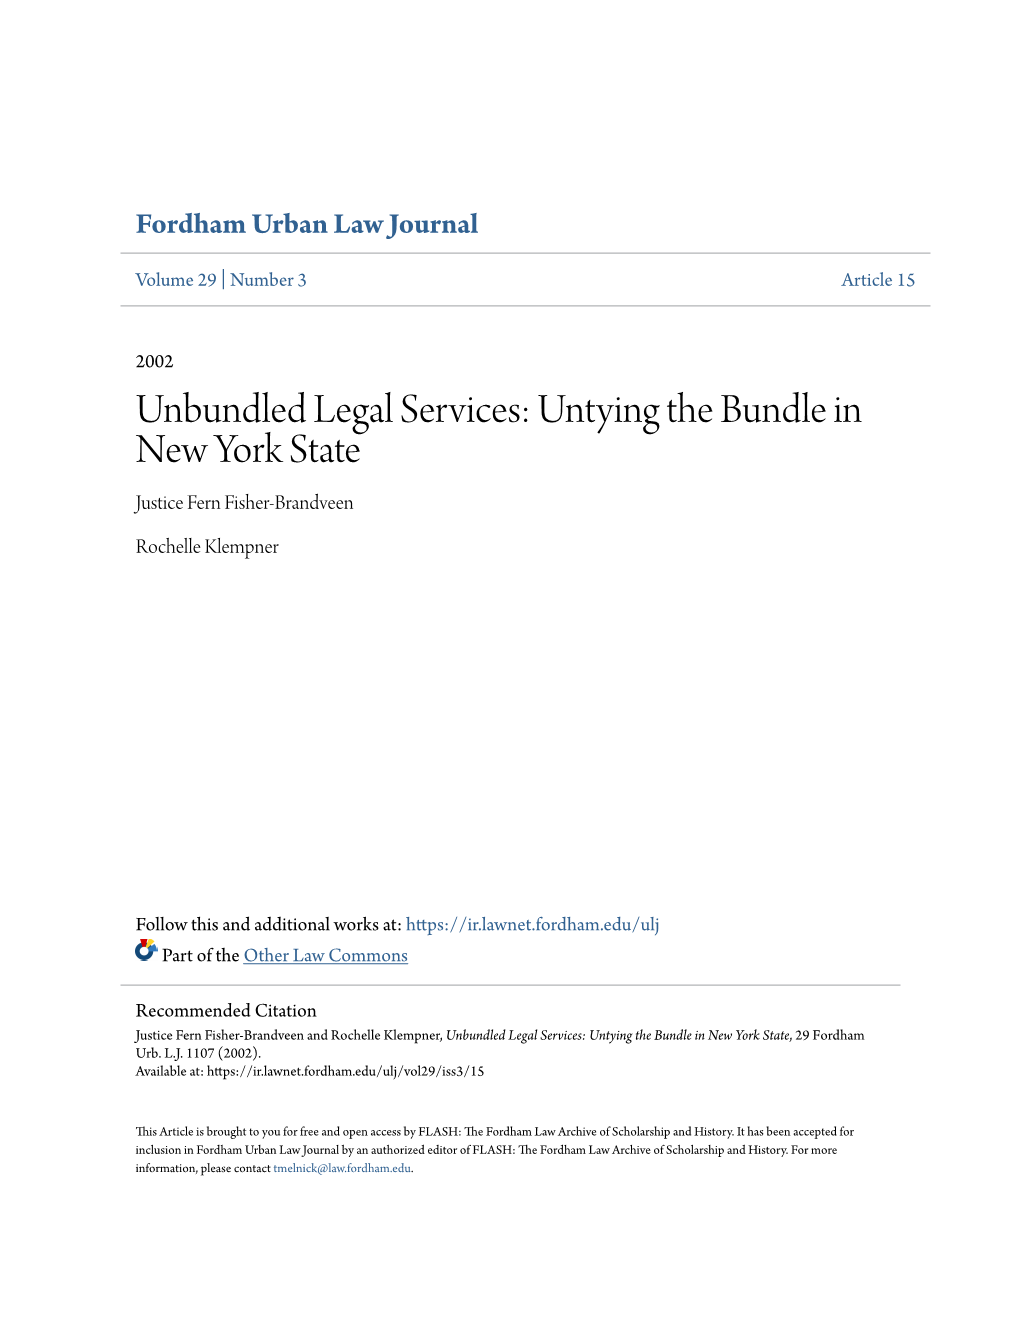 Unbundled Legal Services: Untying the Bundle in New York State Justice Fern Fisher-Brandveen